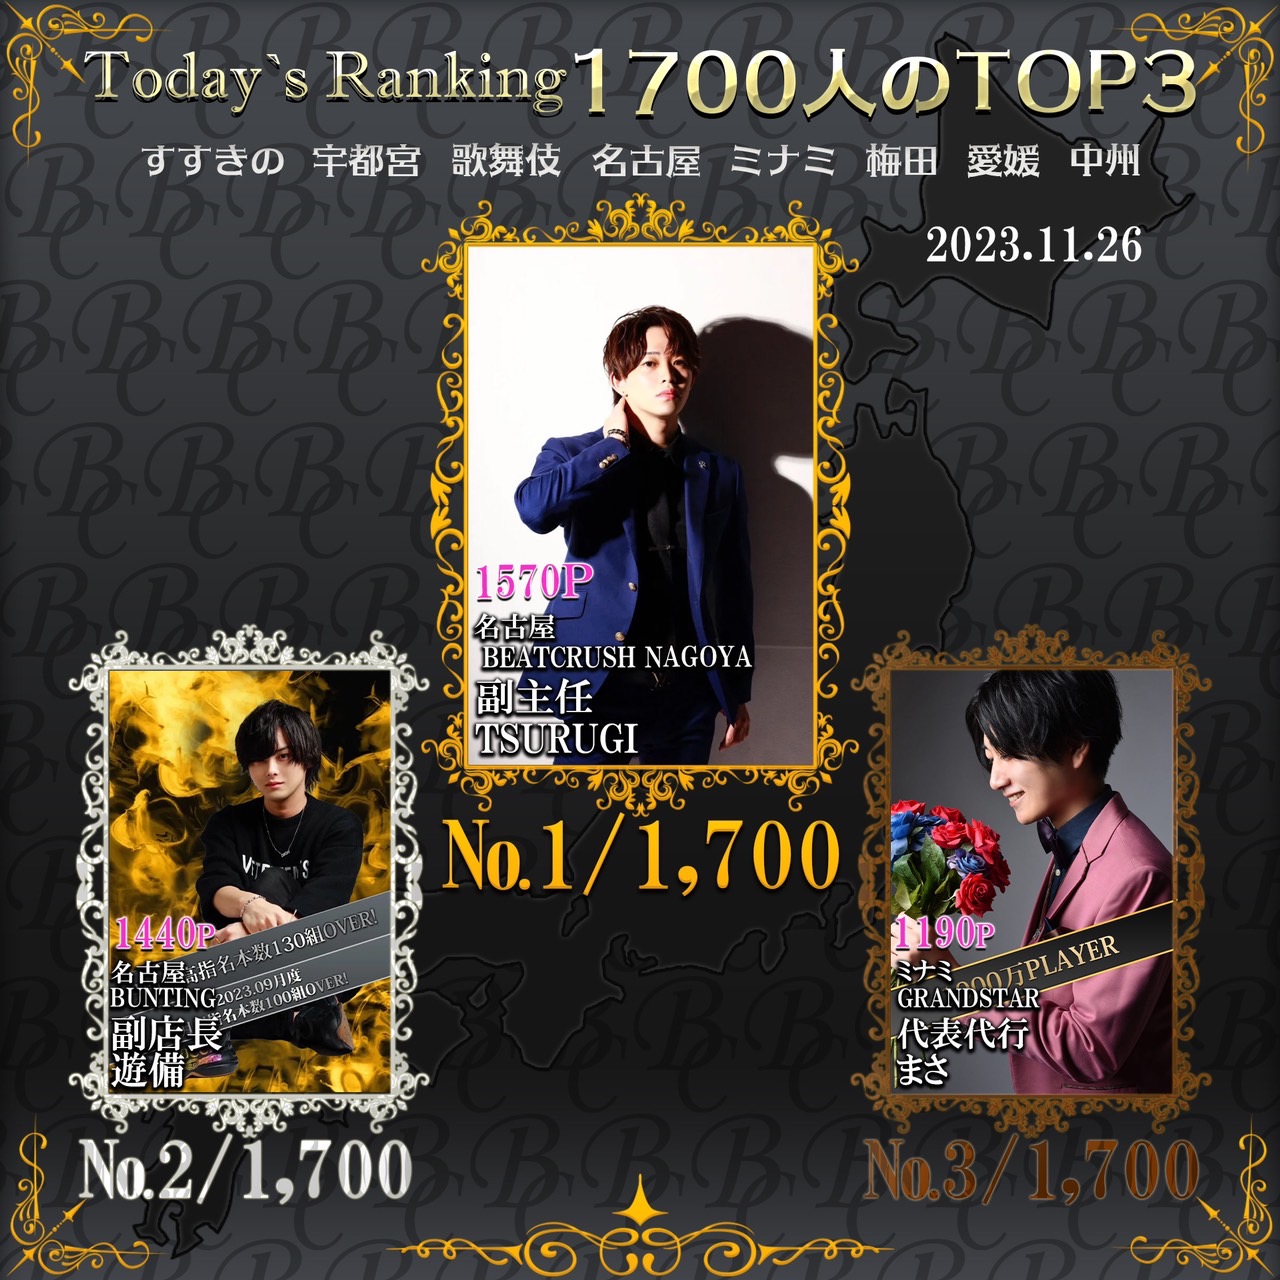 11/26 Today’s Ranking